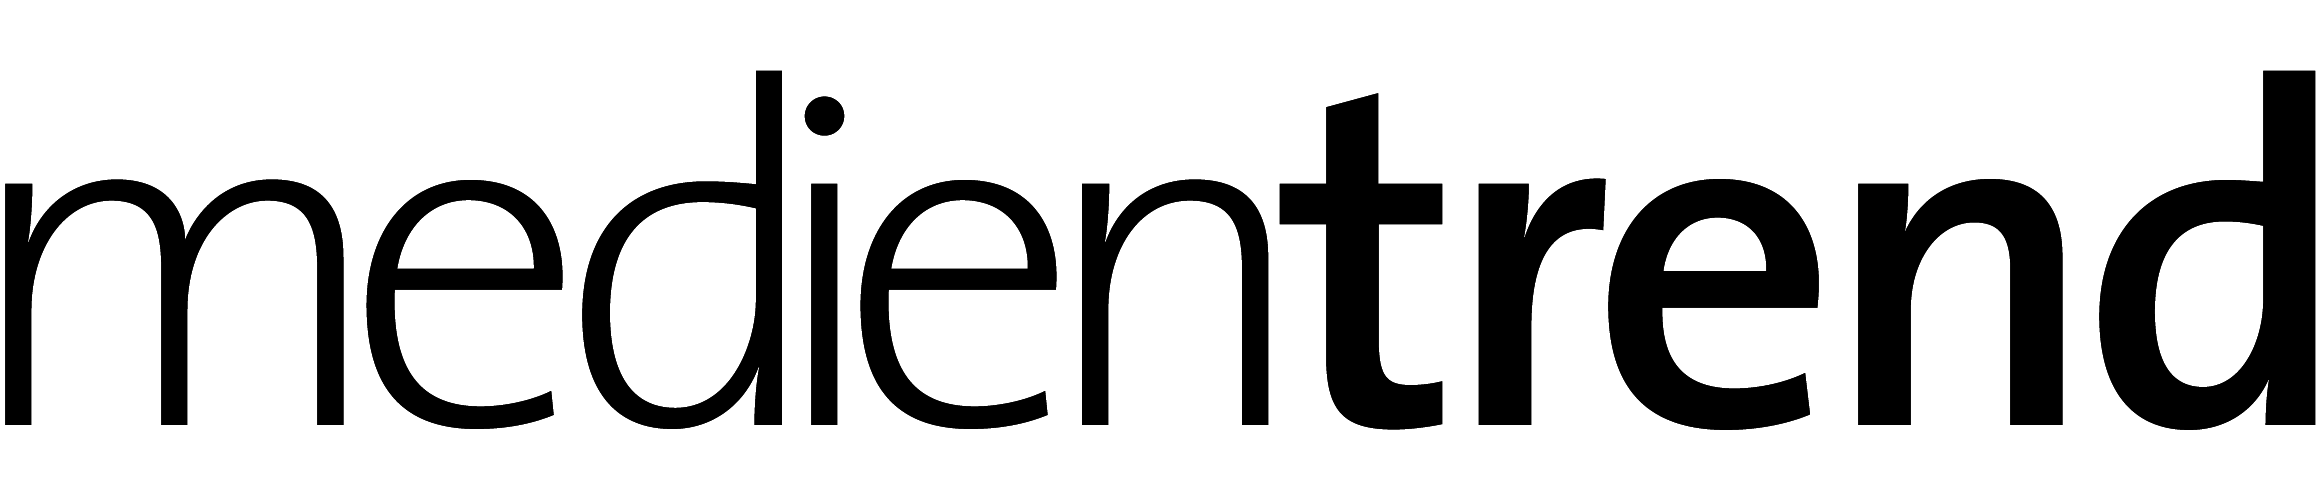 medientrend Logo